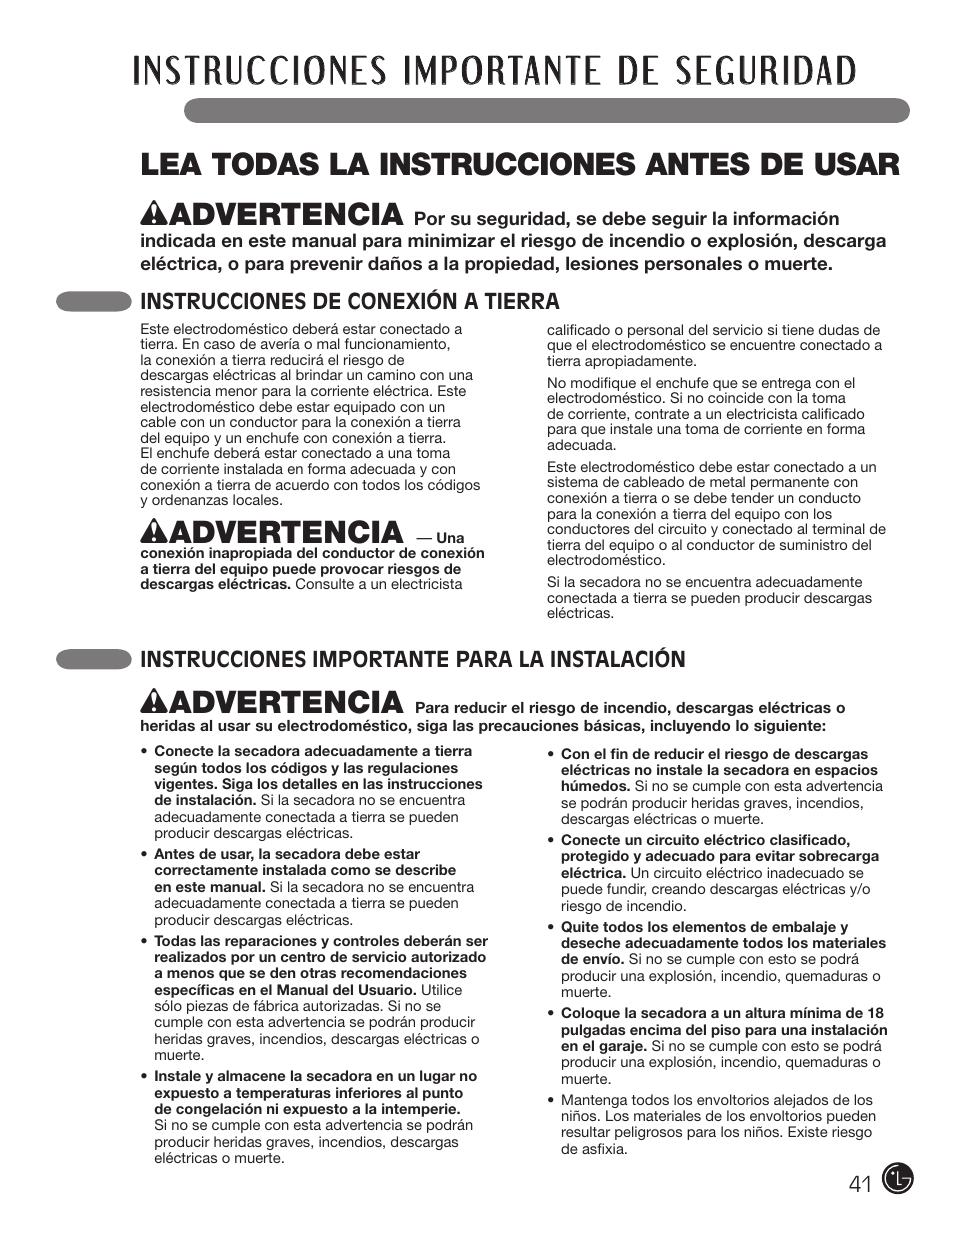 W advertencia | LG D5966W User Manual | Page 41 / 80